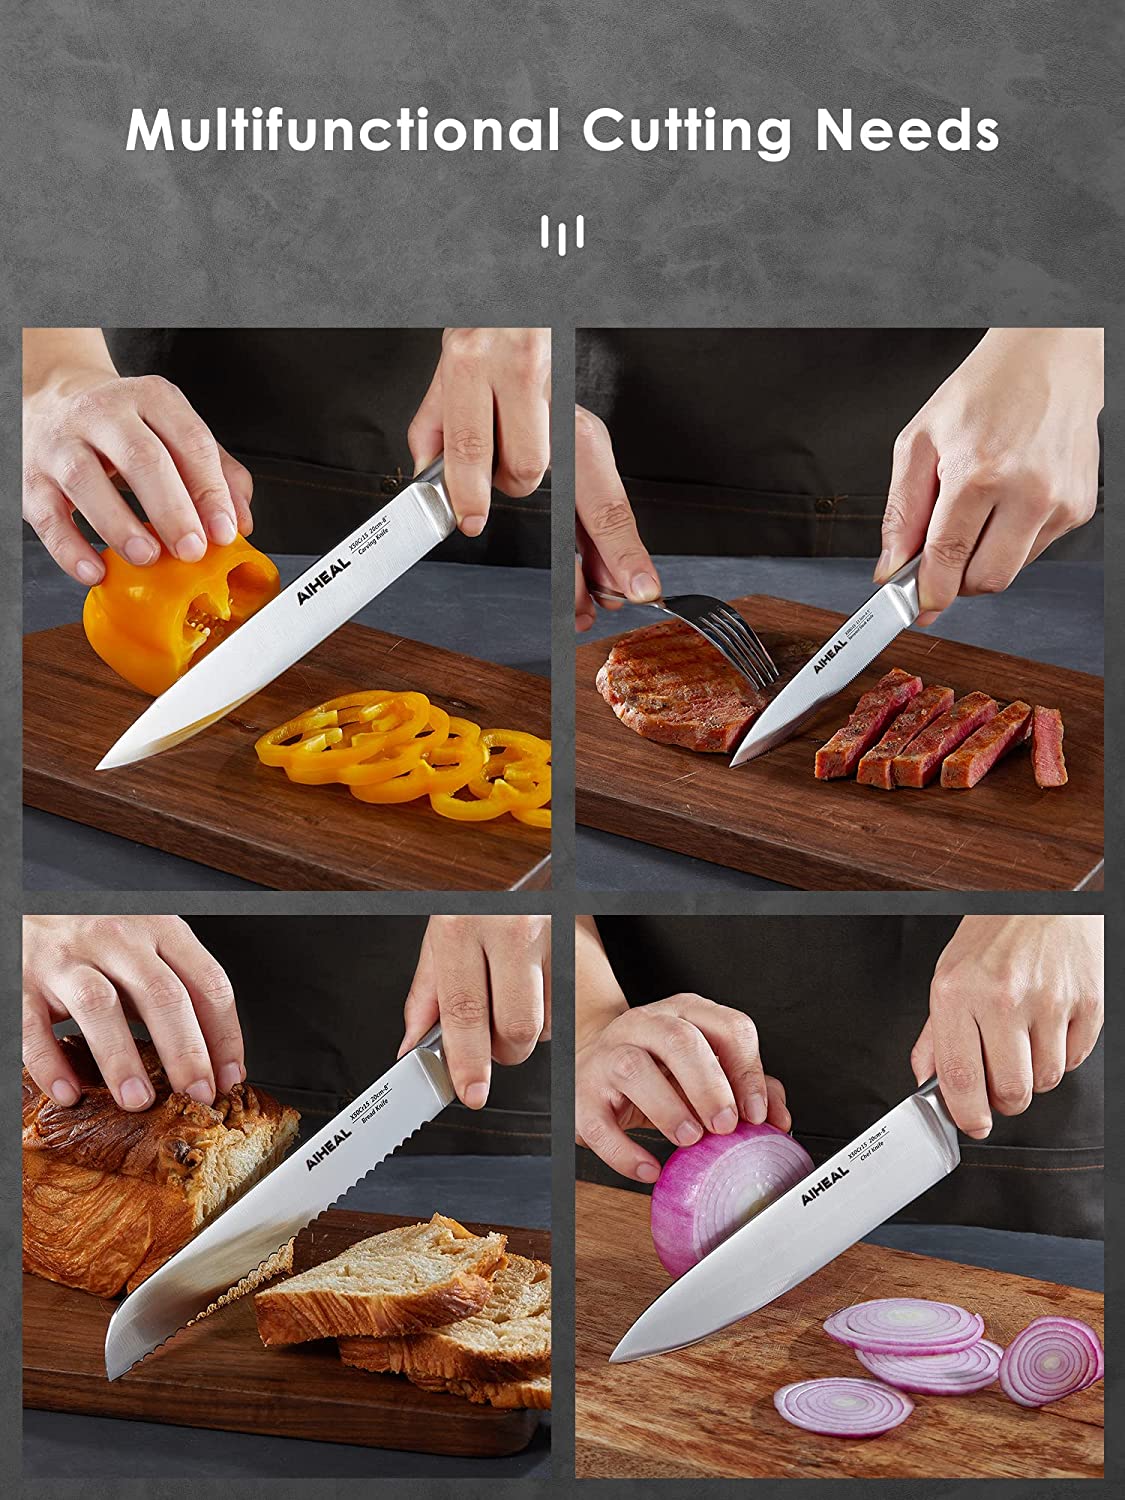 multifunctional cutting needs, 17 pcs knife set, sharp blade, stainless steel